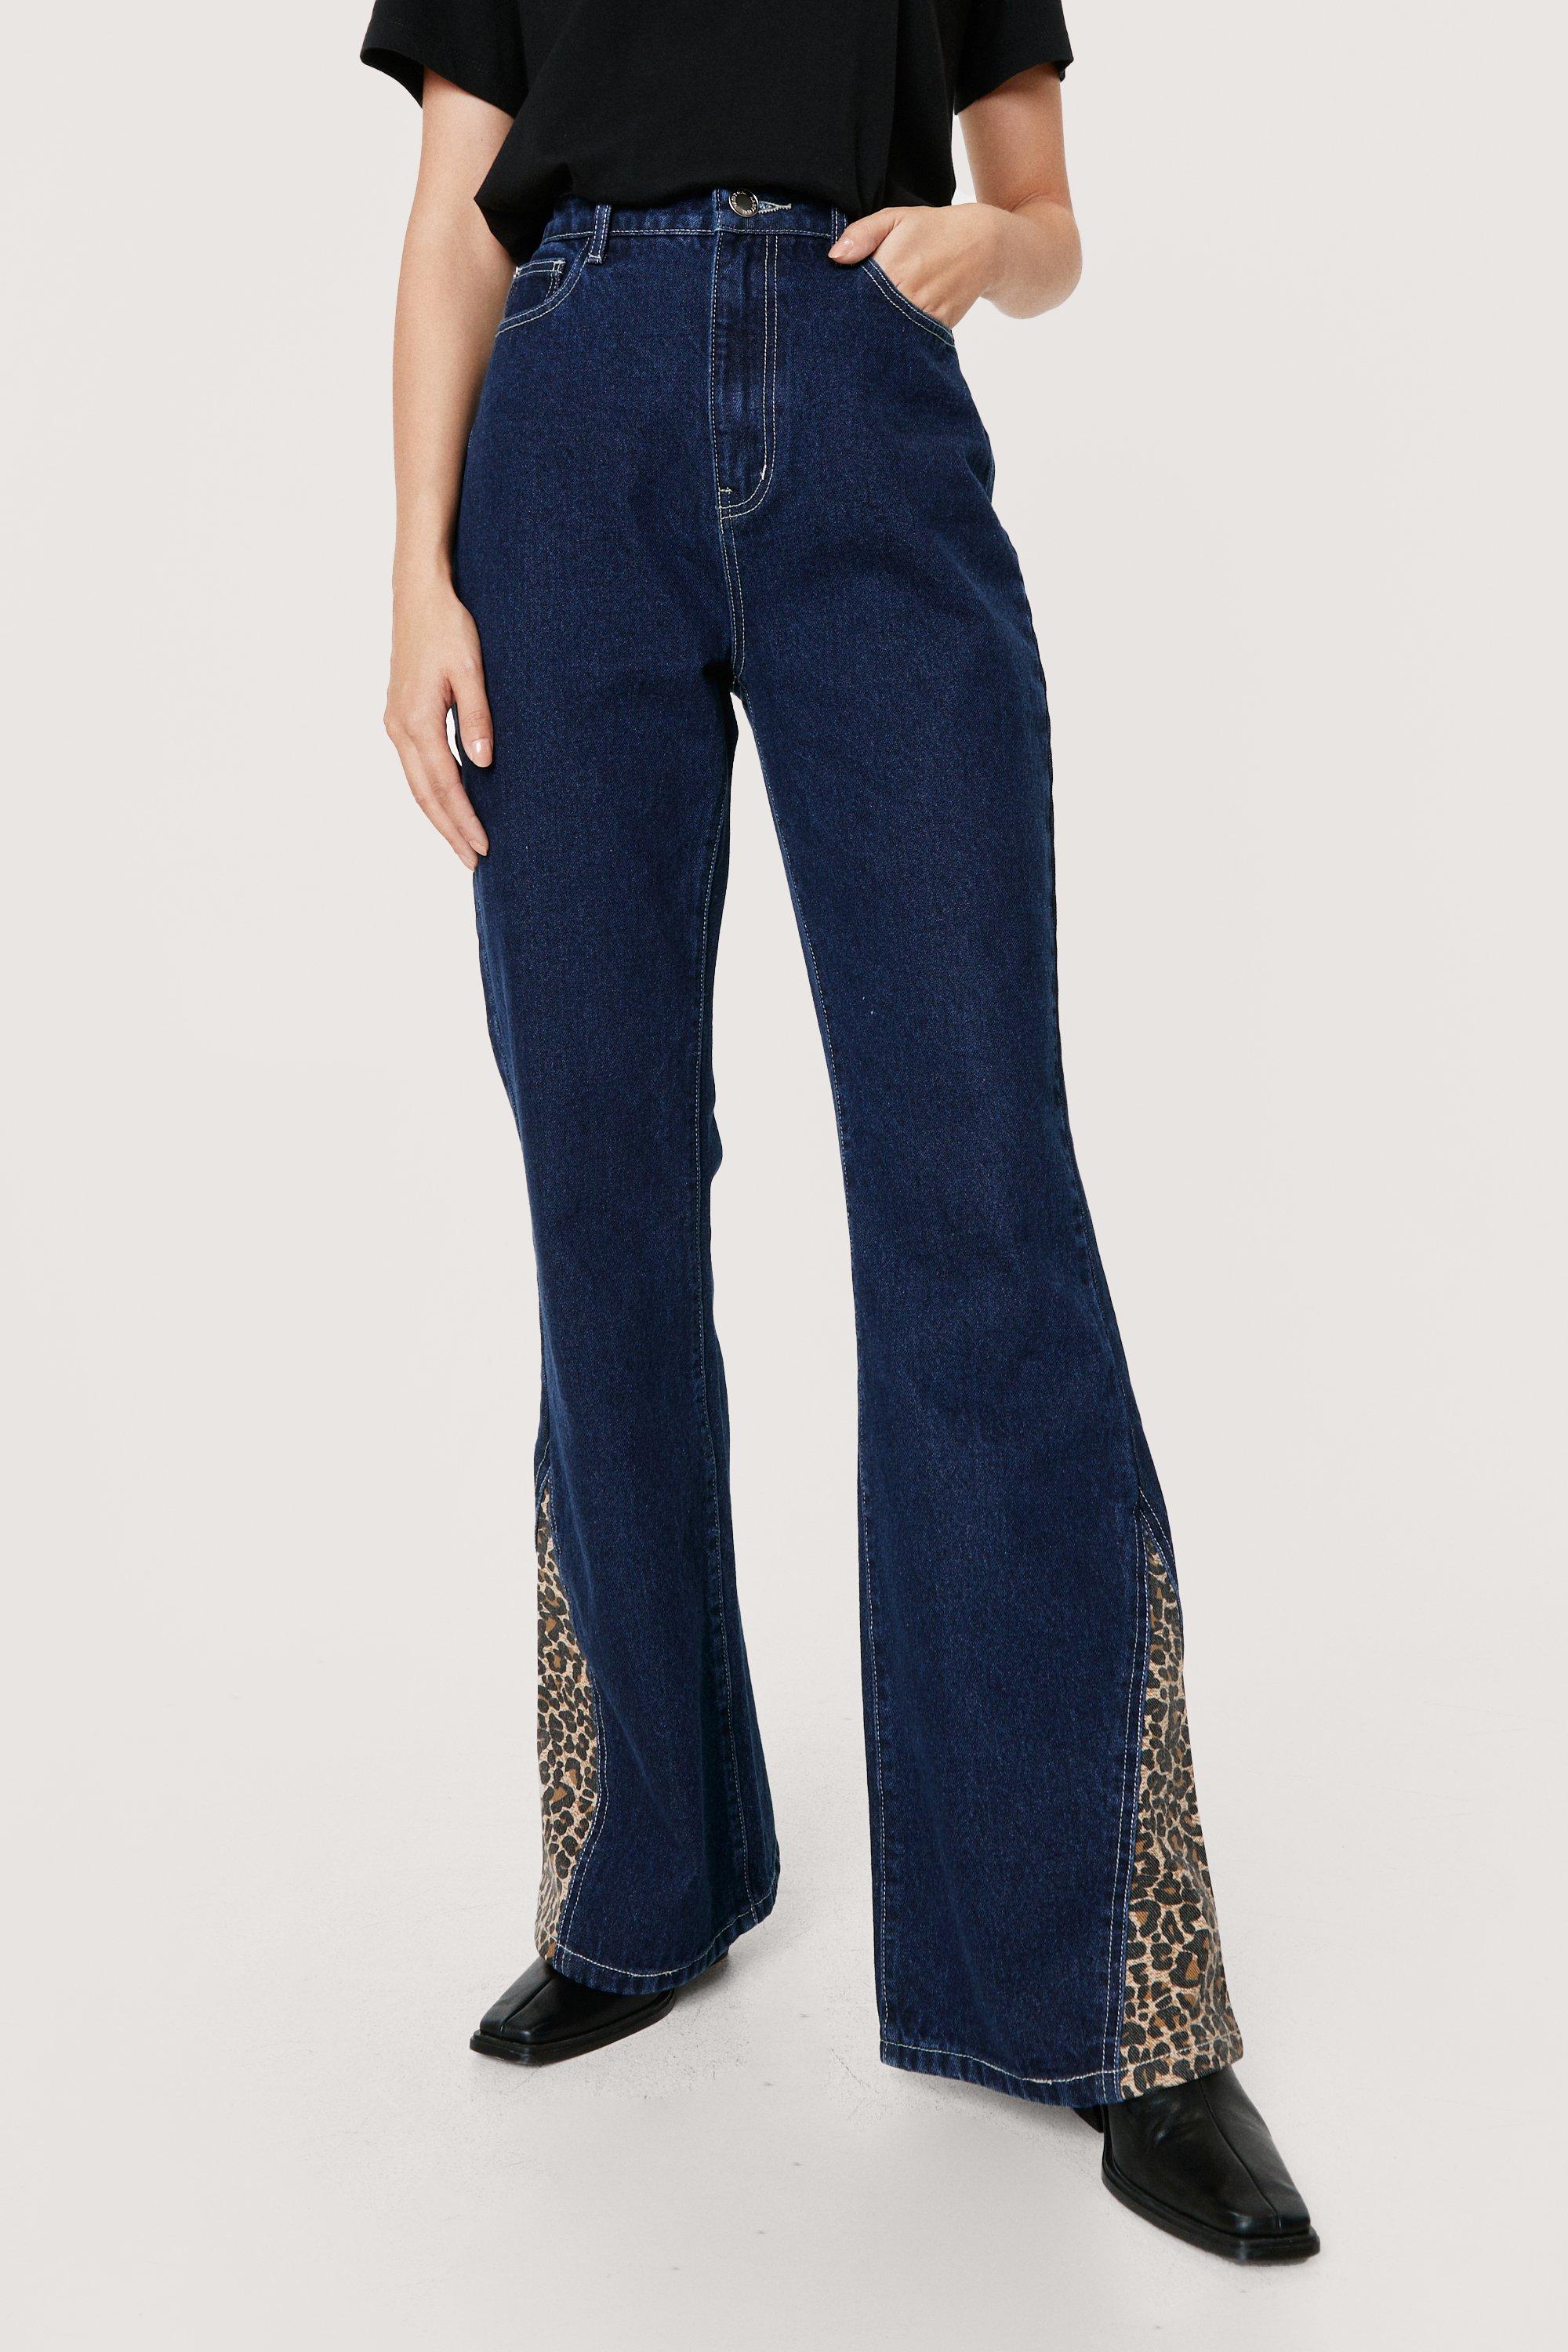 Denim Leopard Flare Jeans  Denim flares, Denim flare jeans, Flare